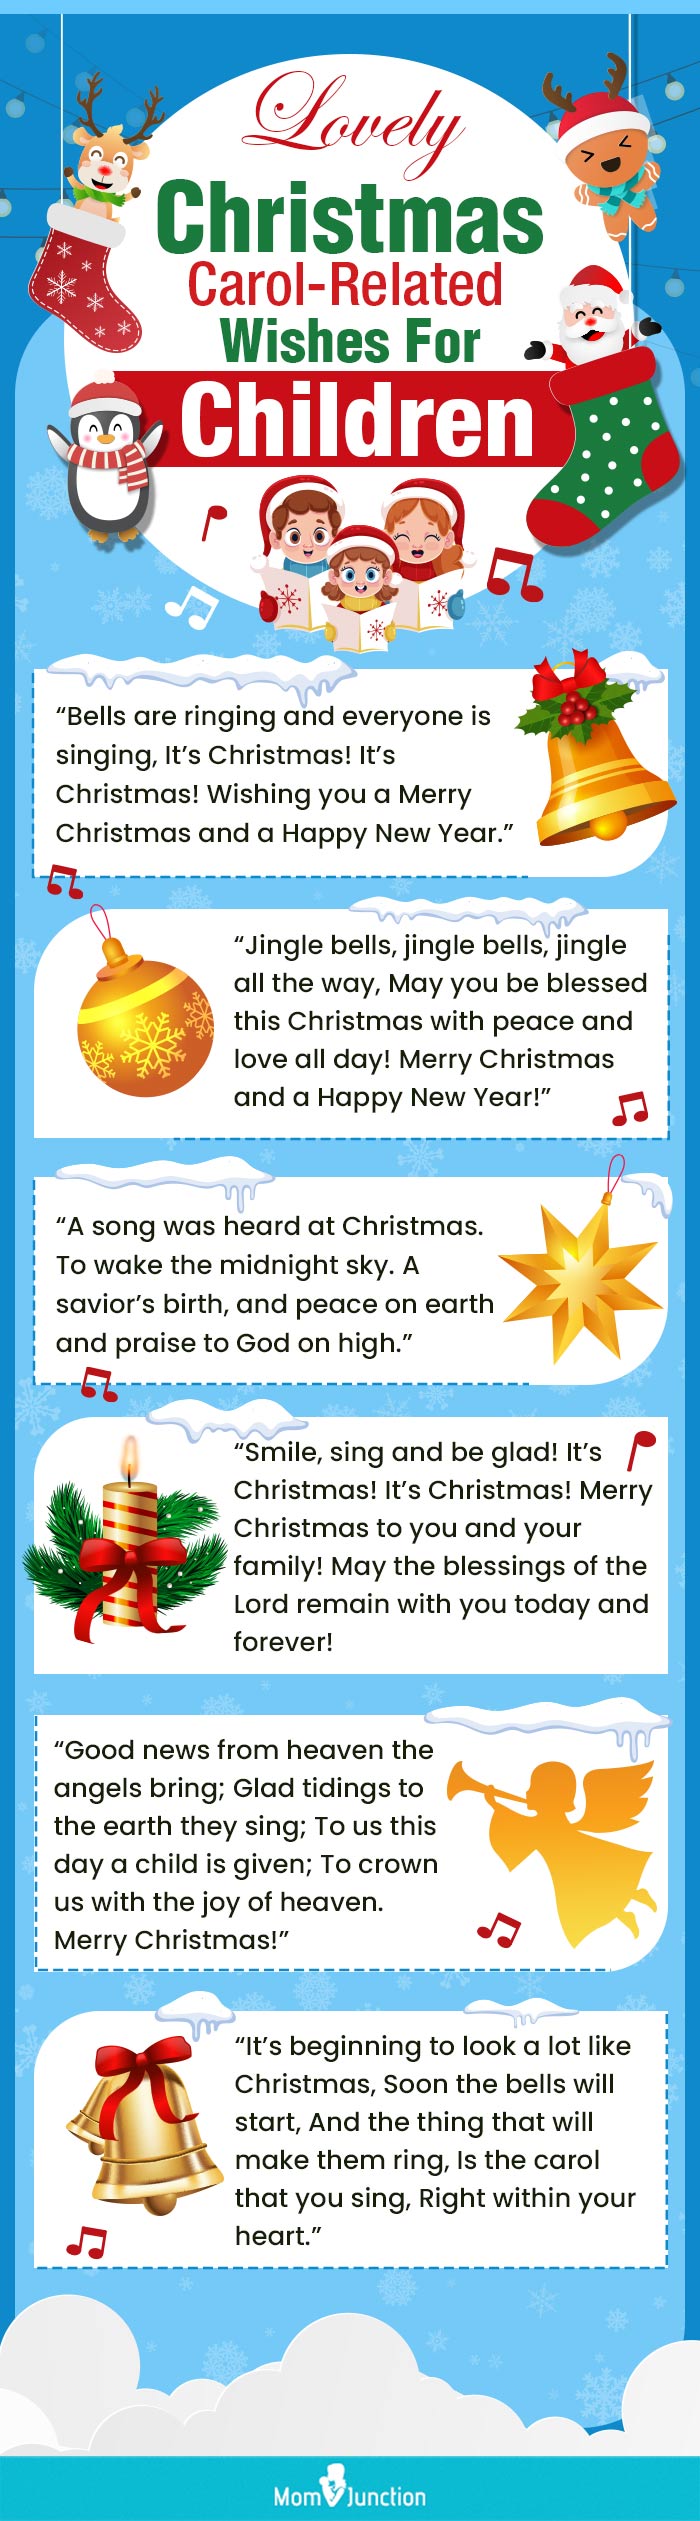 Joy and Light Christmas Card for Mom and Dad